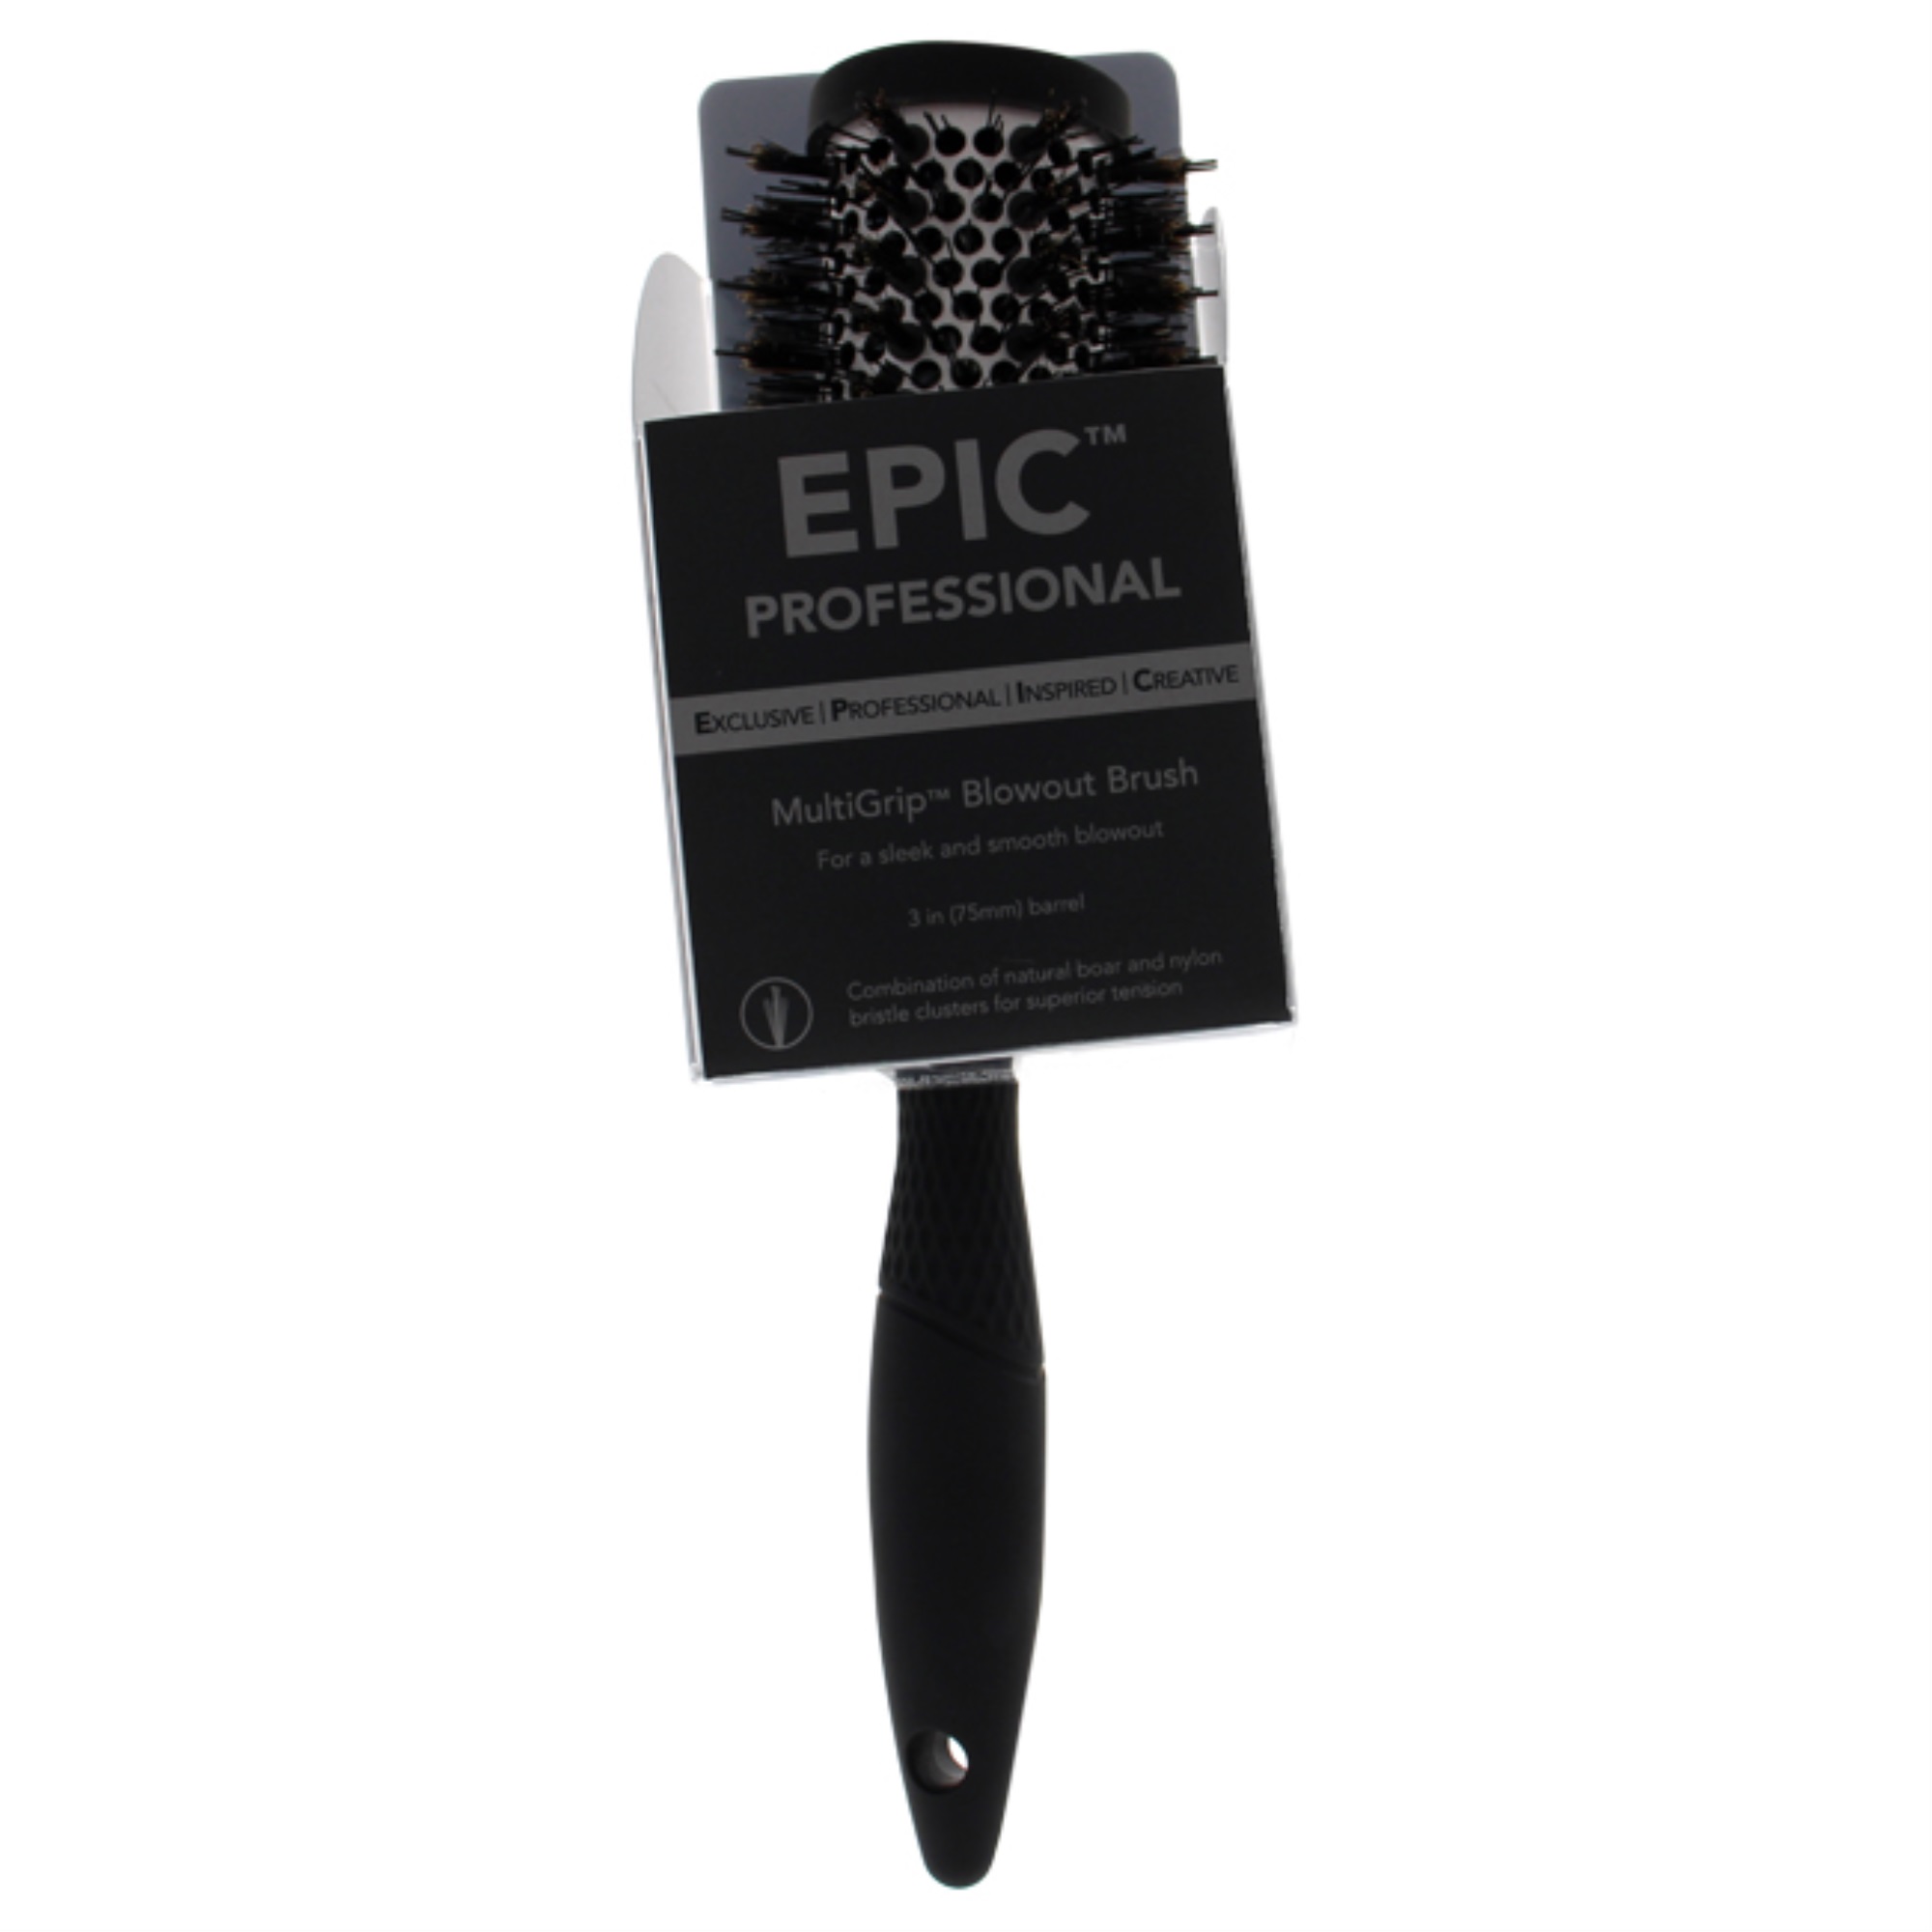 Wet Brush Pro Epic MultiGrip Blowout Brush - Large by Wet Brush for Unisex - 2.5 Inch Hair Brush